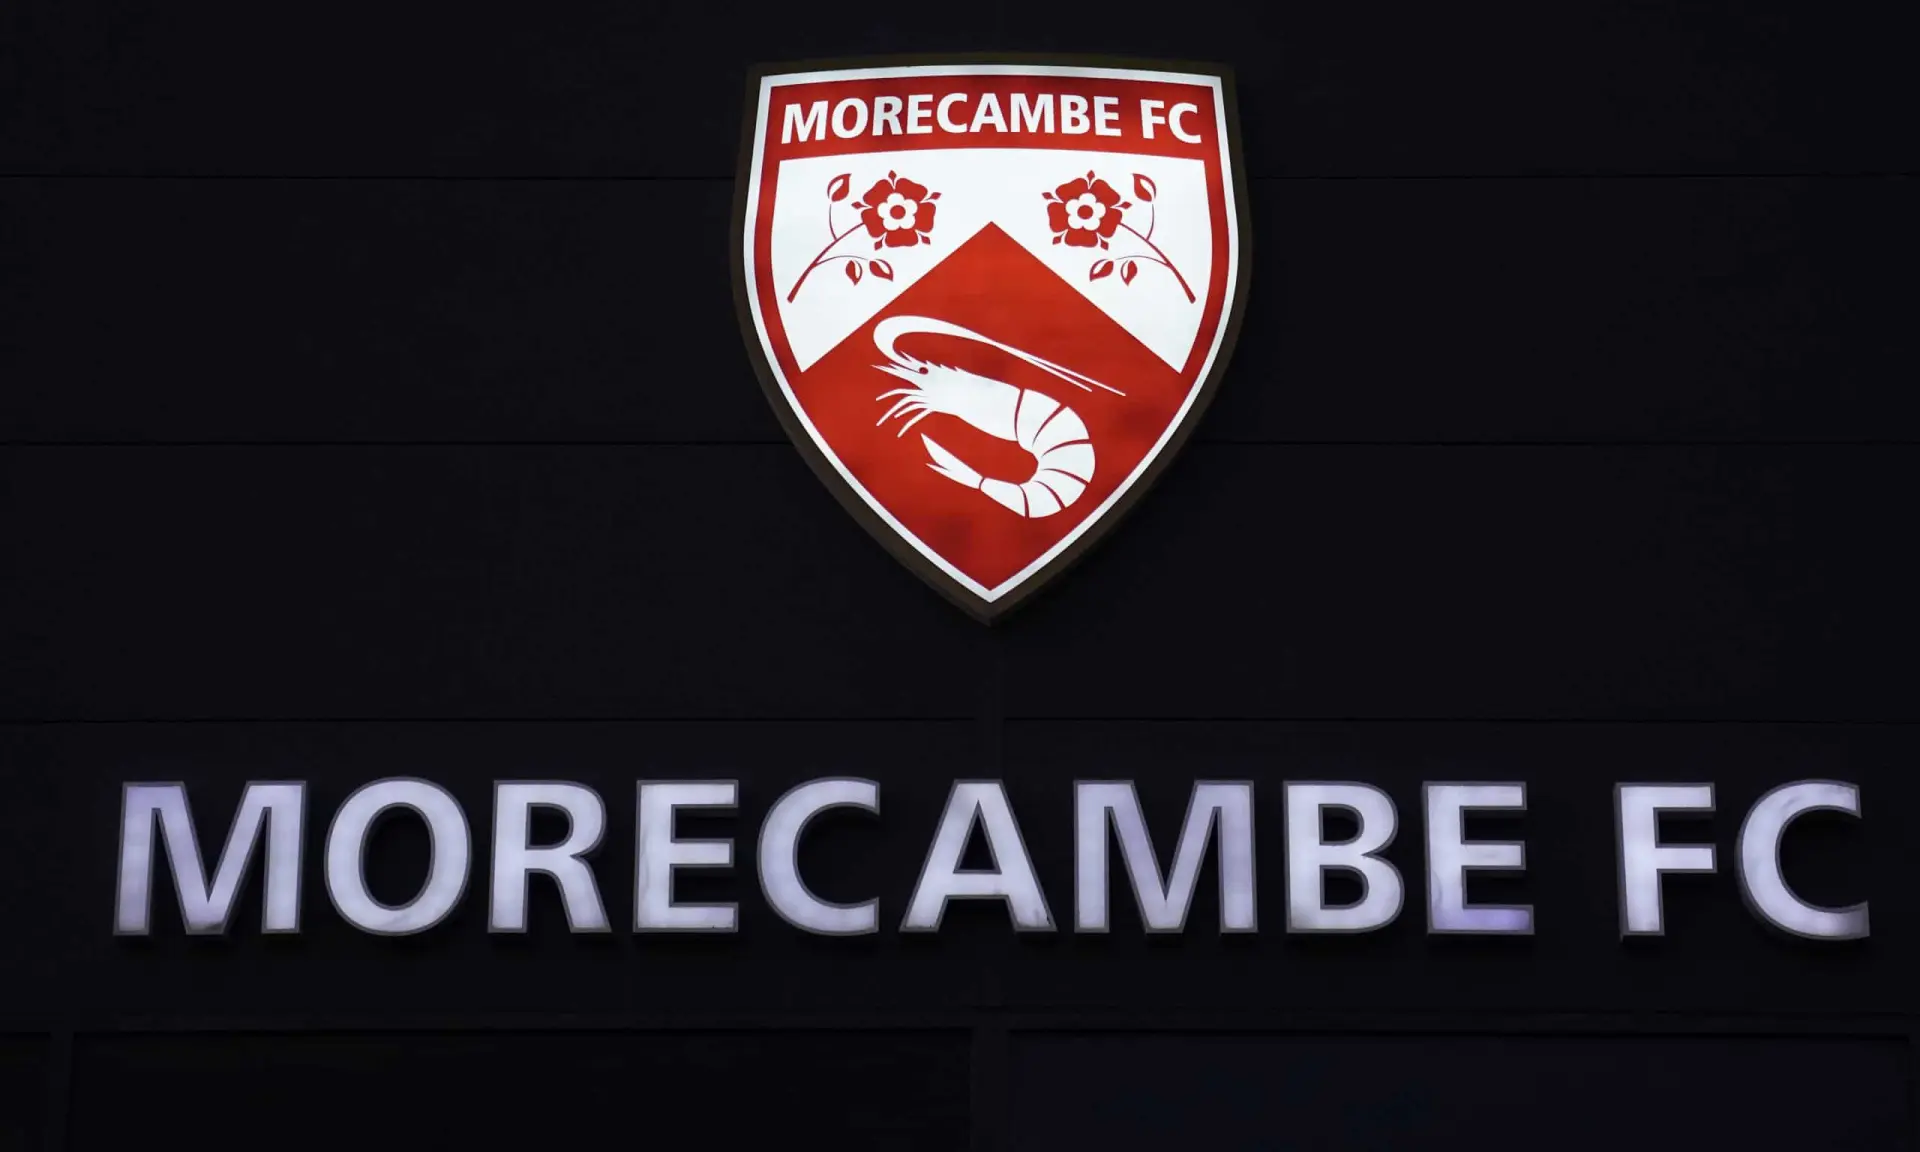 Morecambe